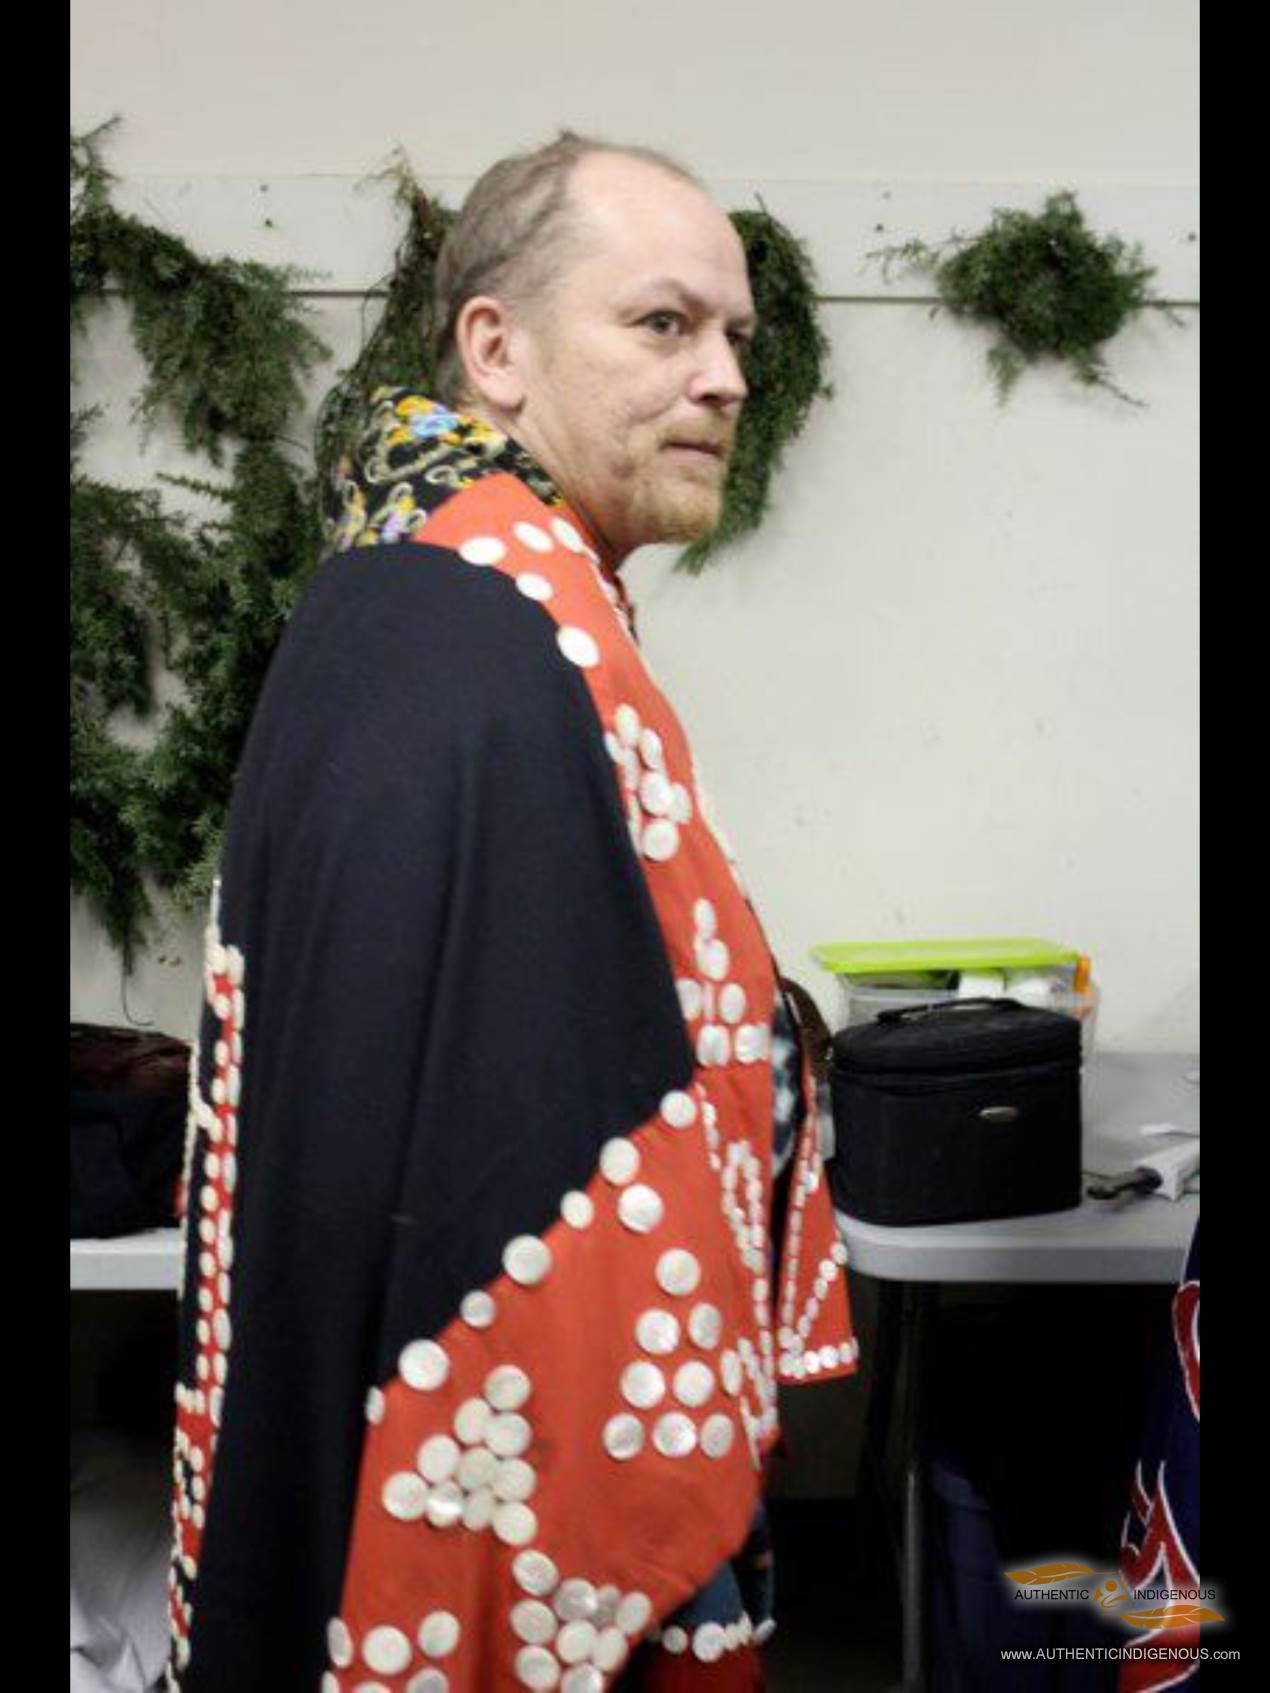 Shawn Karpes (Kwak'waka'wakw) wearing his button blanket